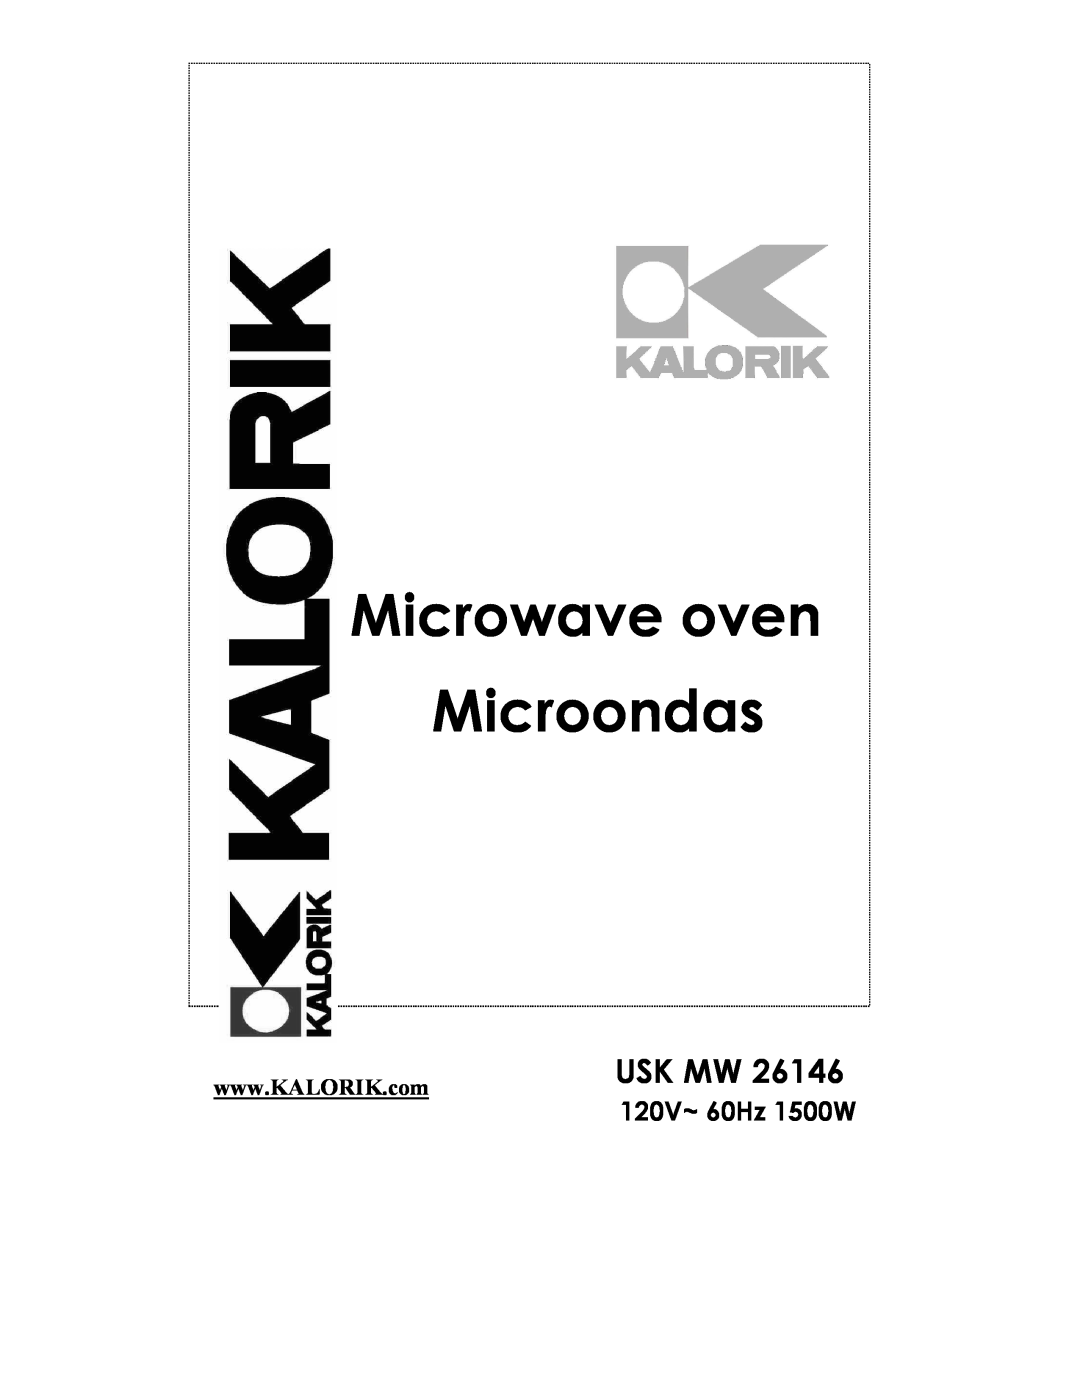 Kalorik USK MW 26146 manual 120V~ 60Hz 1500W, Microwave oven Microondas, Usk Mw 